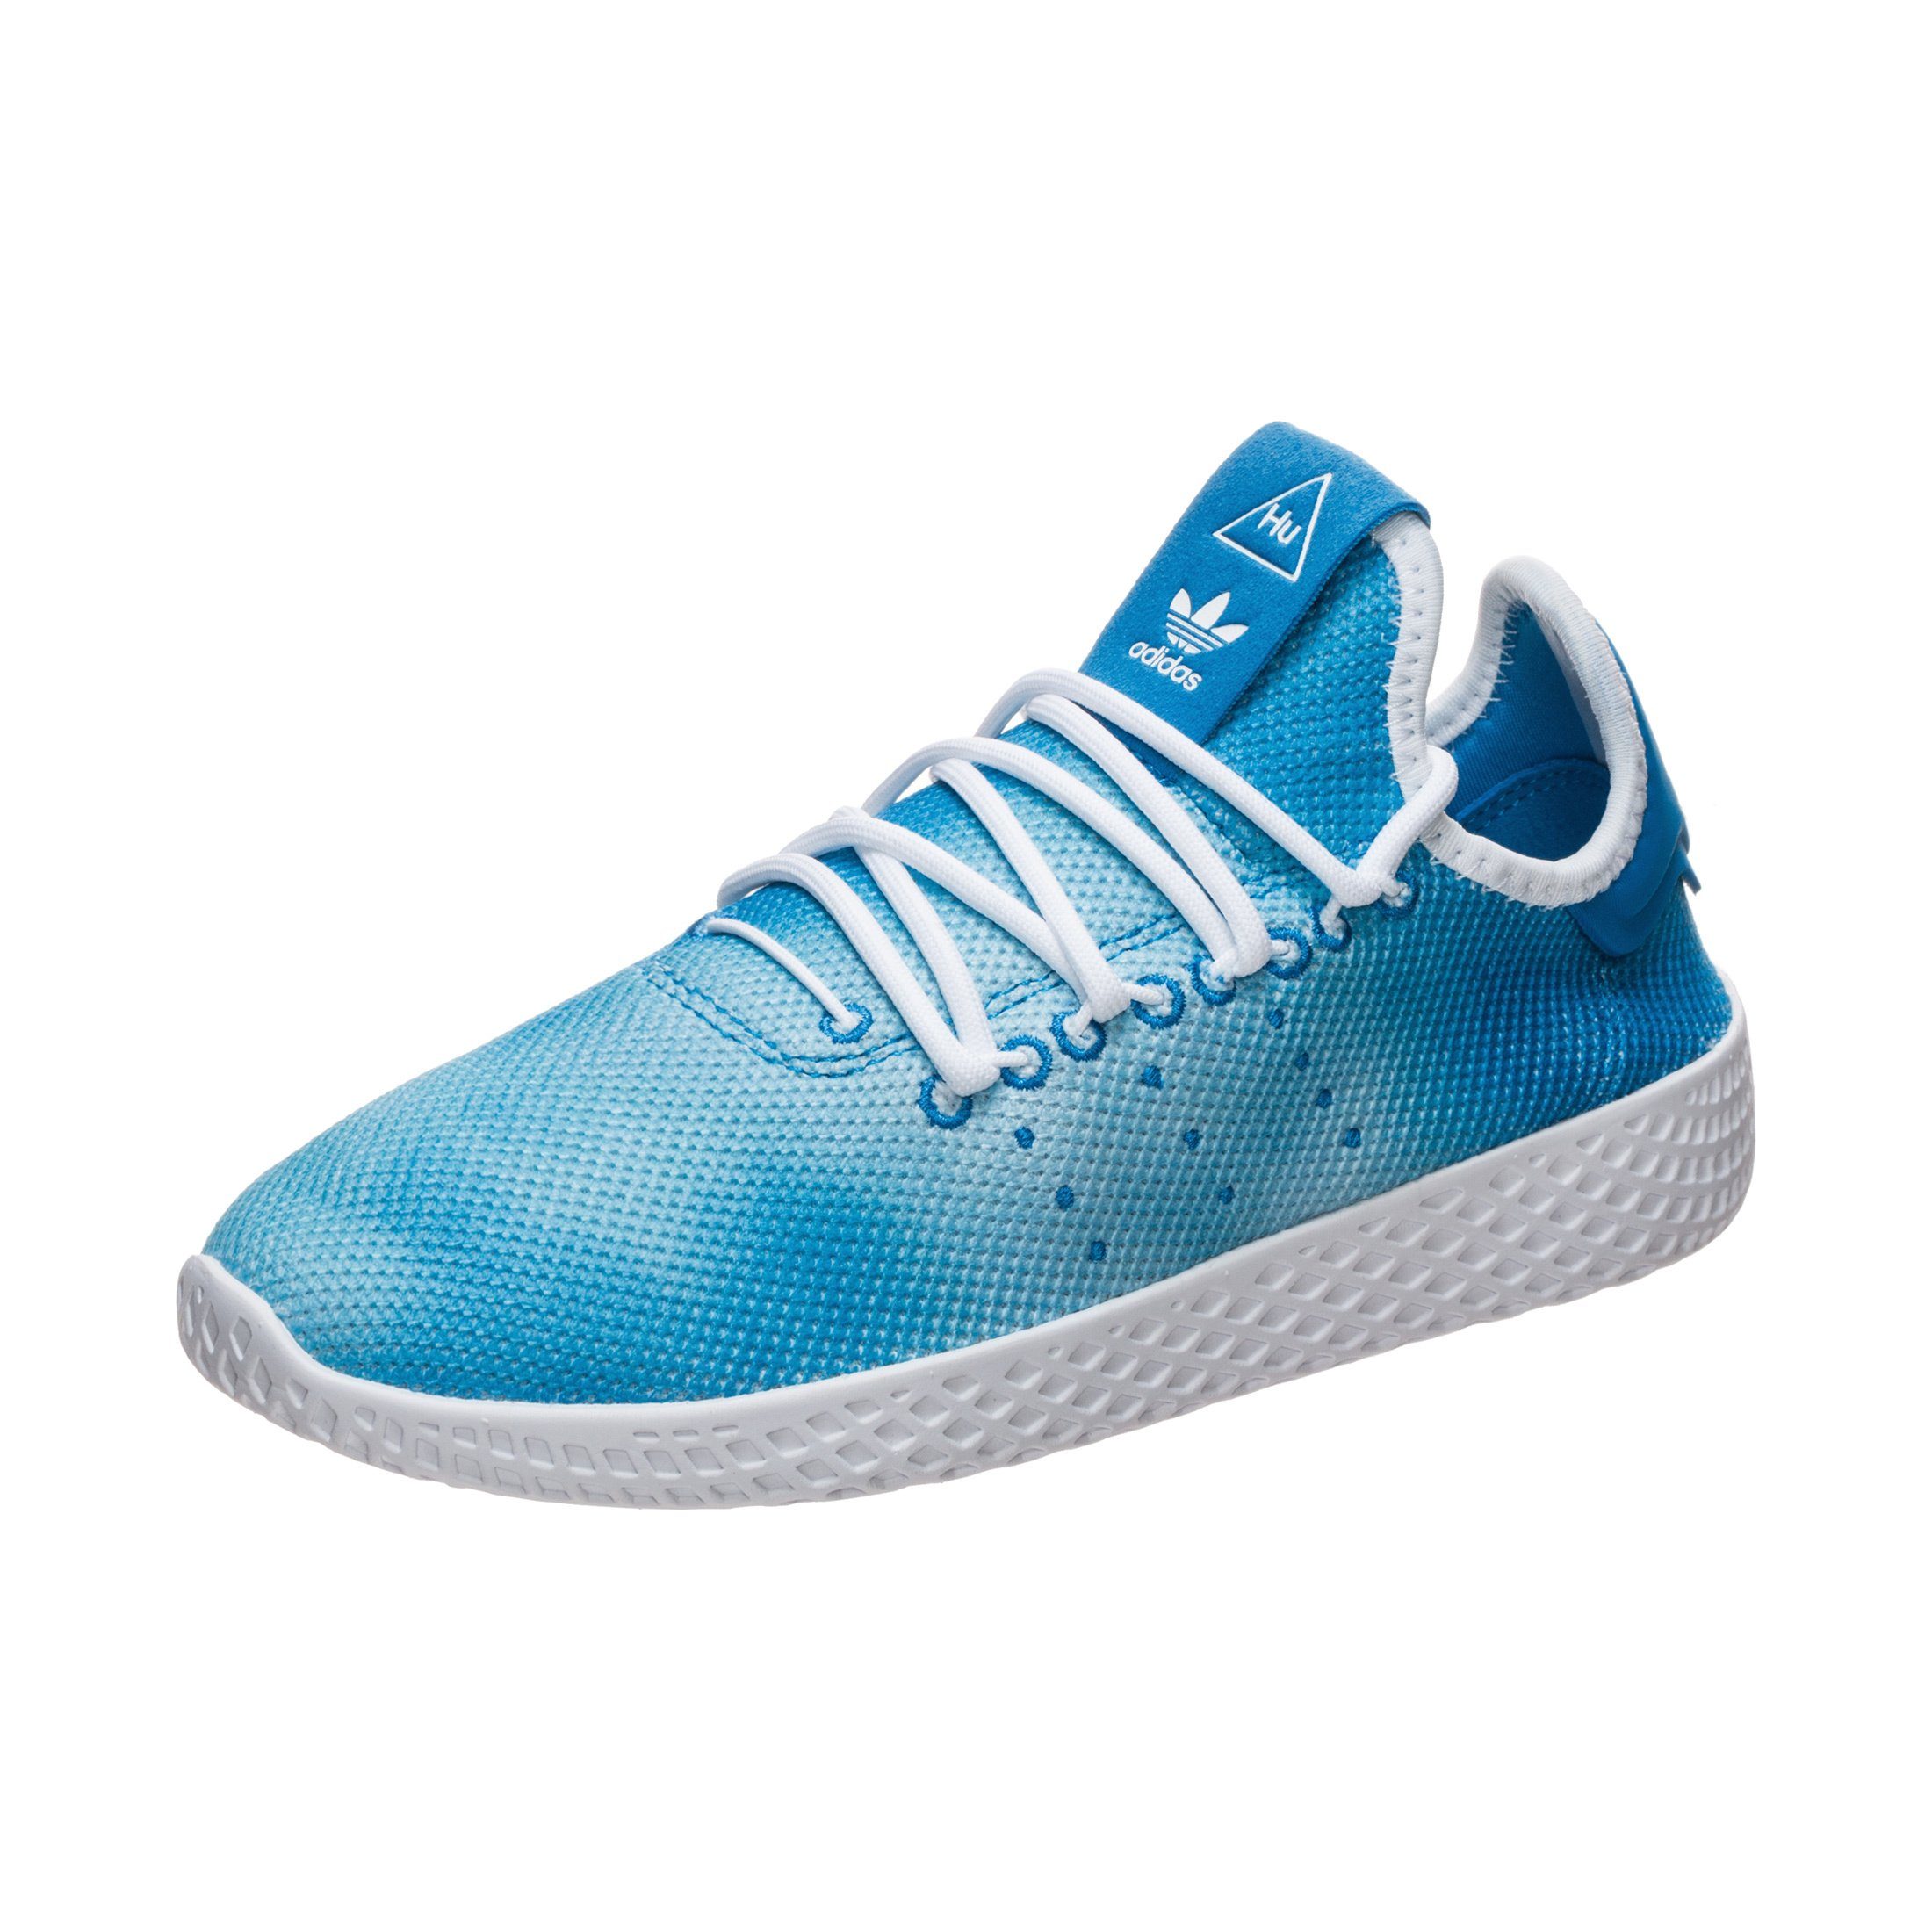 adidas Originals »Pharrell Williams Tennis Hu« Sneaker online kaufen | OTTO